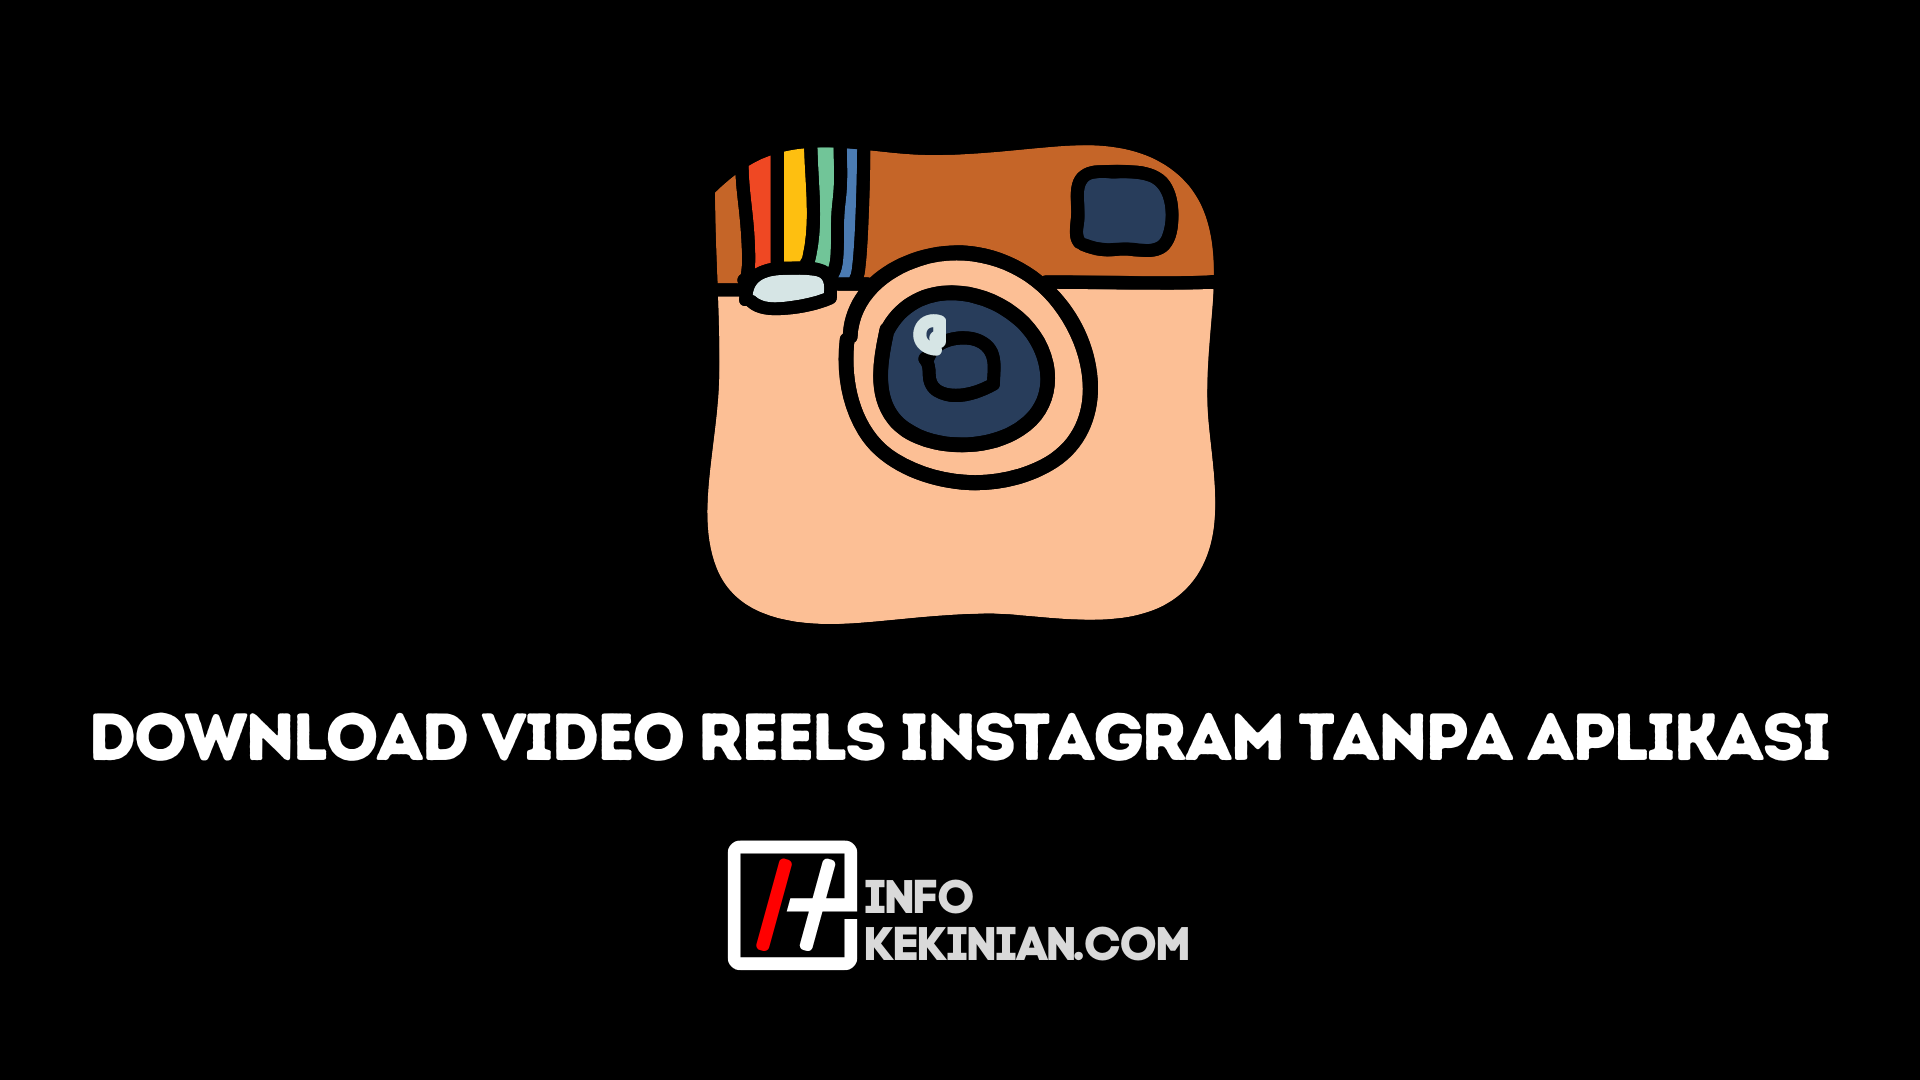 Download video reels instagram tanpa aplikasi